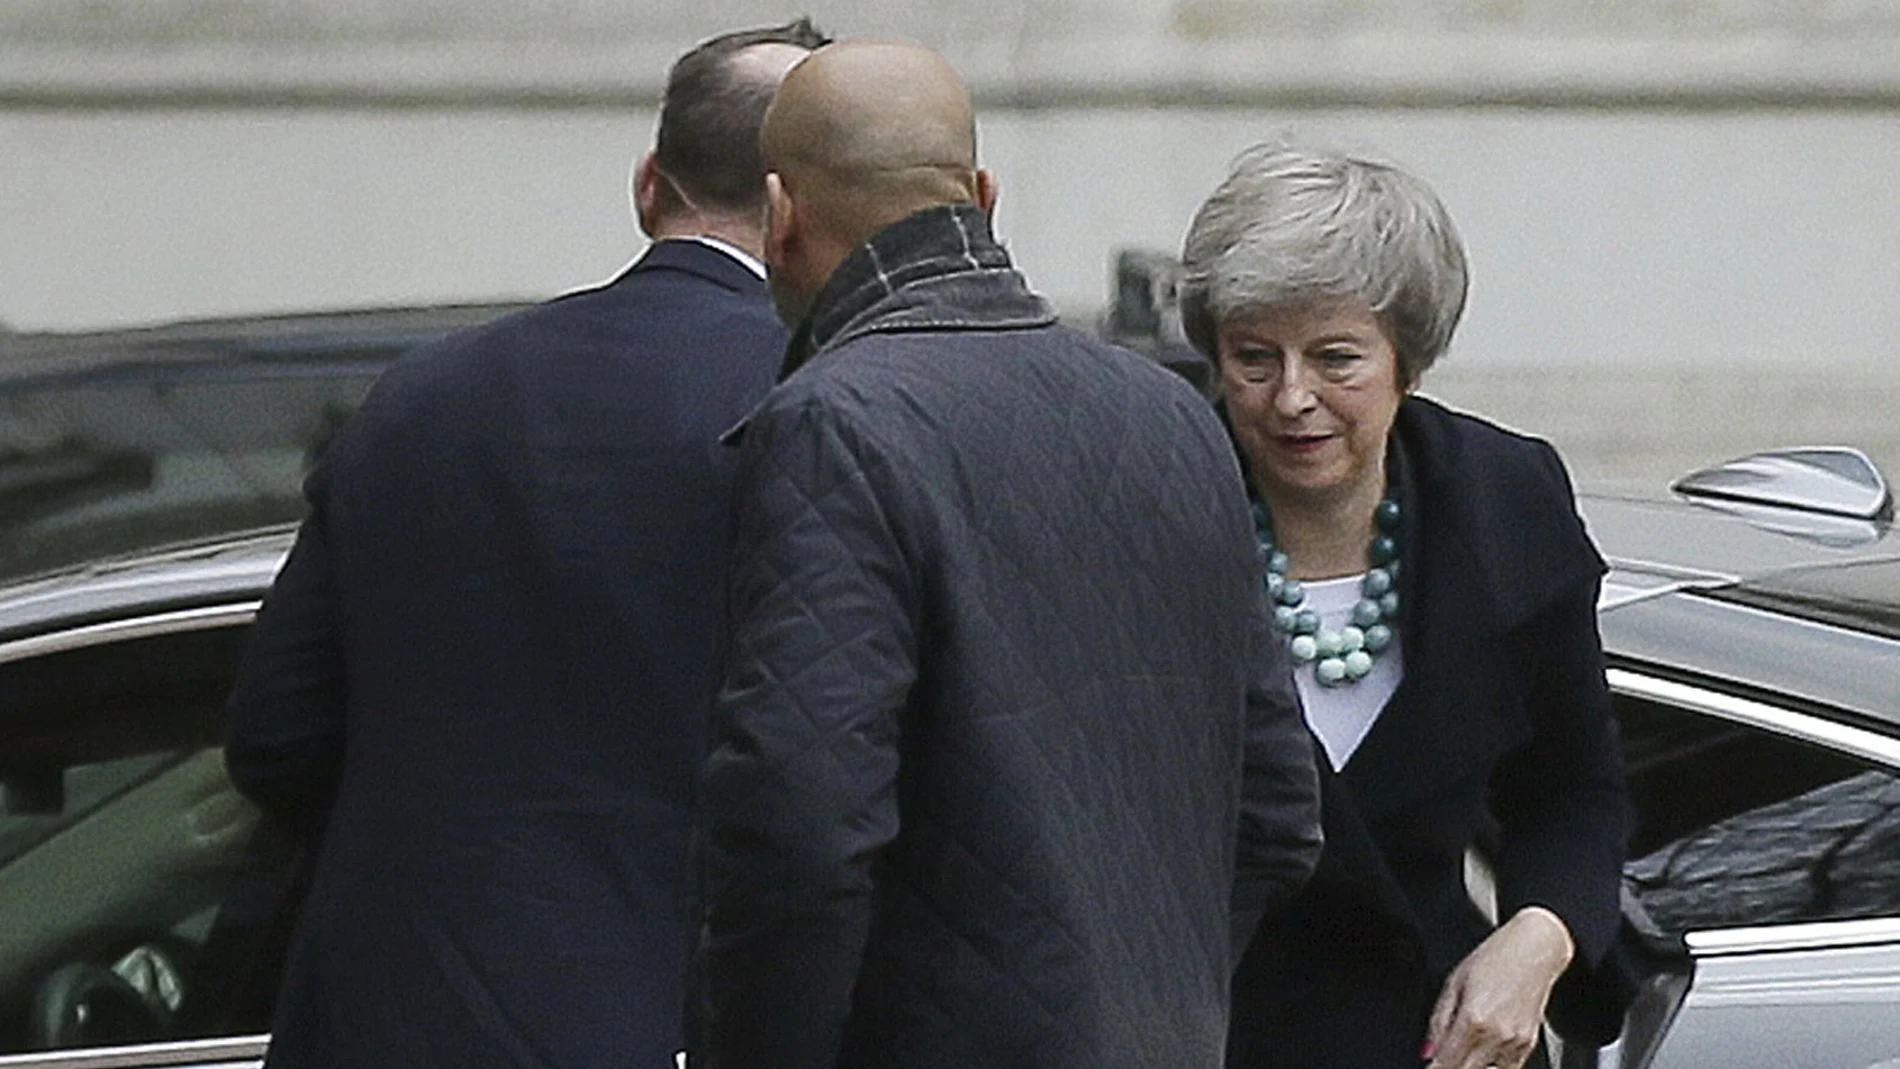 La primera ministra británica, Theresa May, a su llegada a Downing Street esta mañana